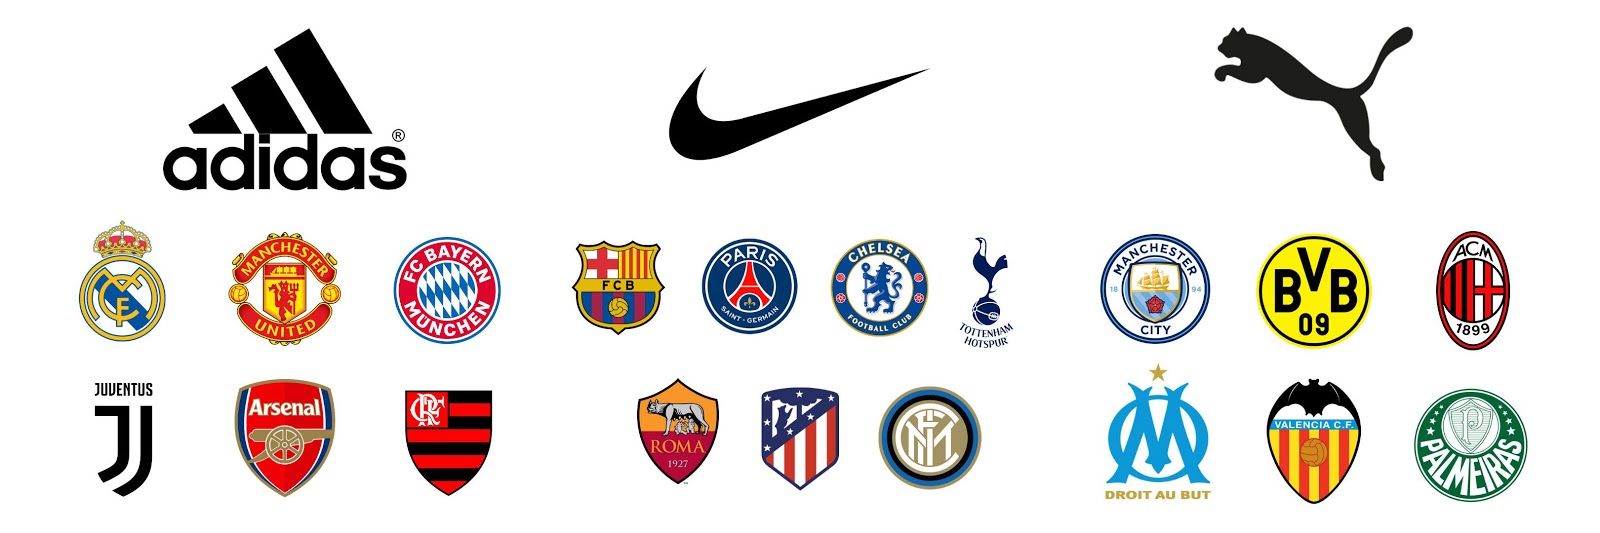 soccer teams sponsored by adidas